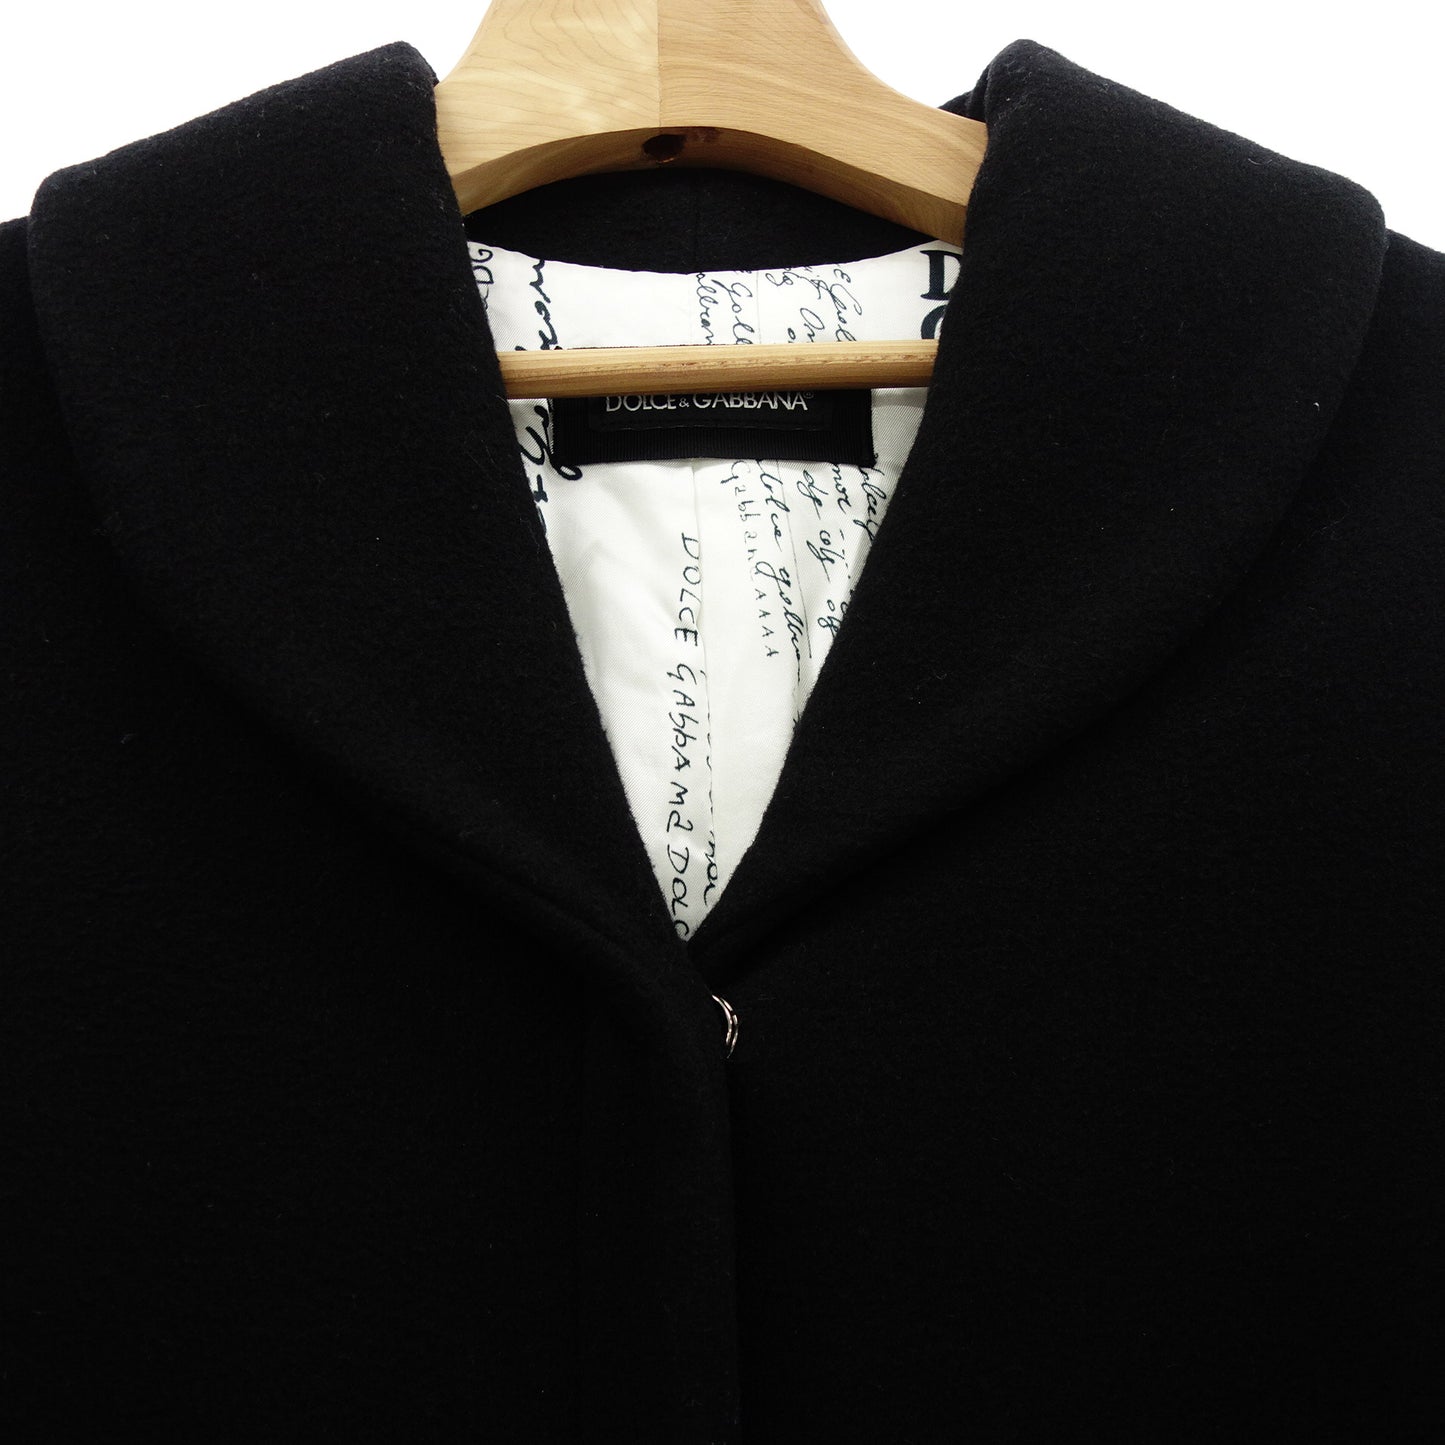 Dolce &amp; Gabbana Belted Coat Women's Black 11/12 DOLCE&amp;GABBANA [AFA8] [Used] 